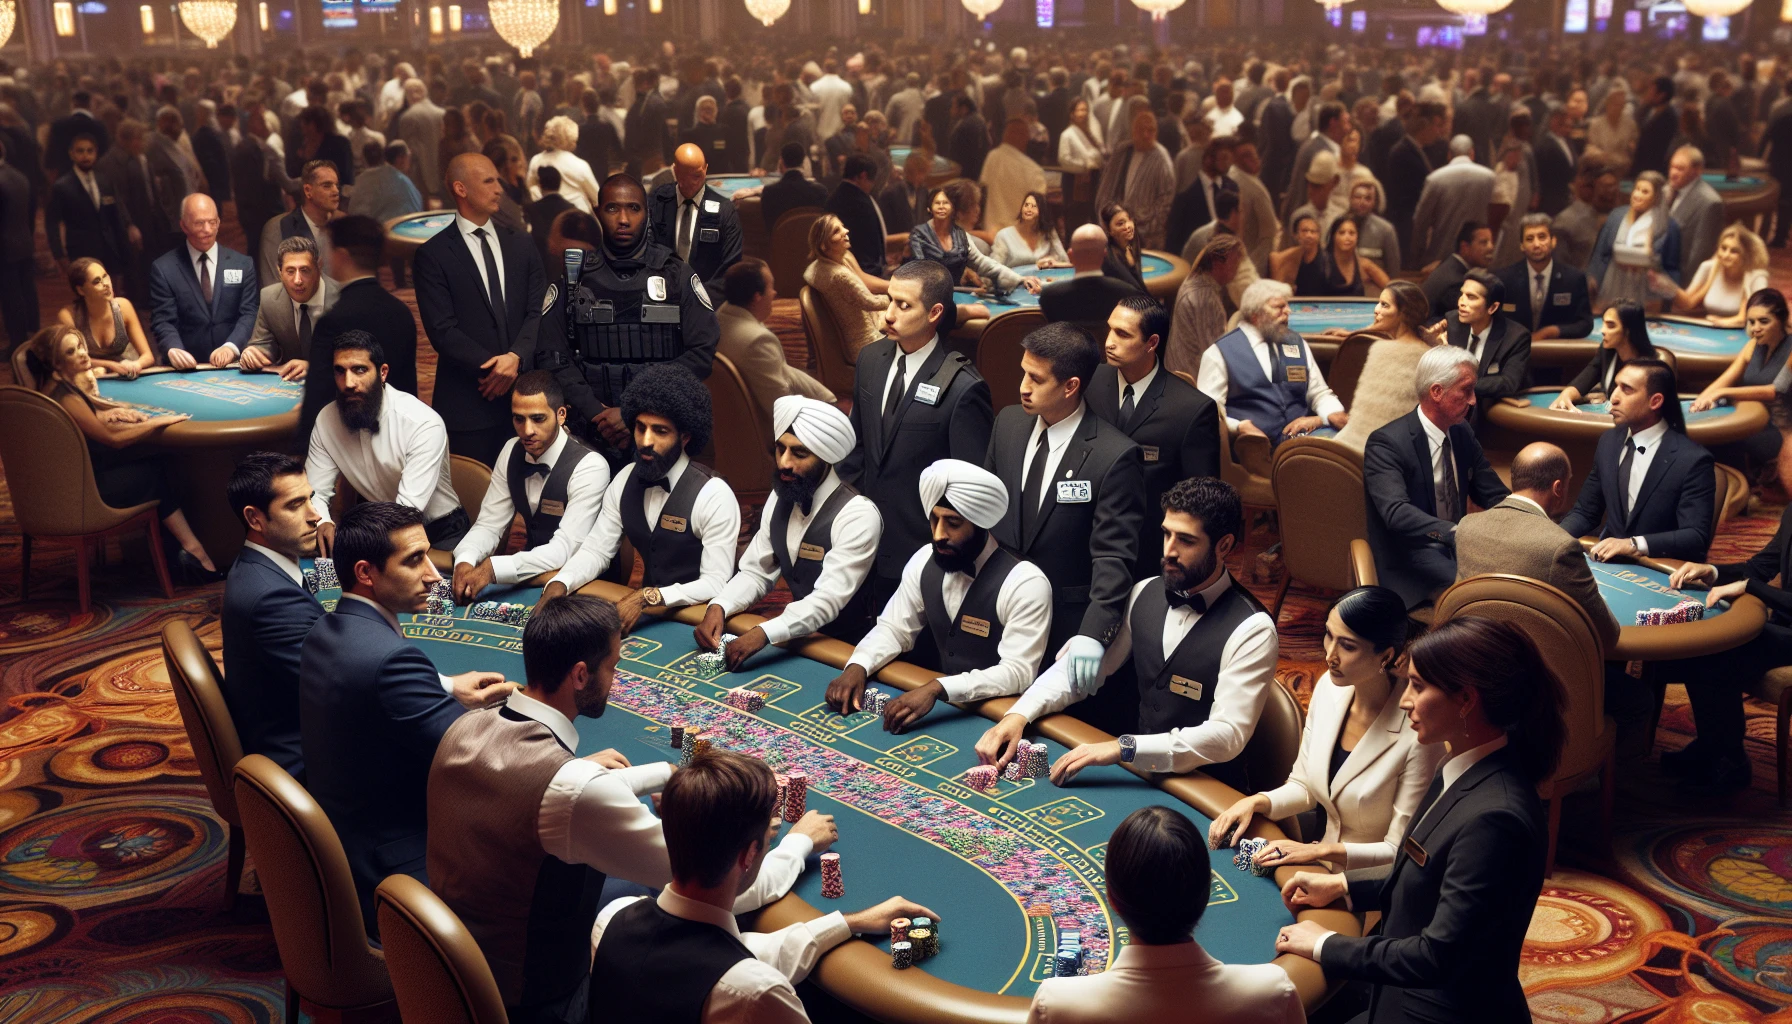 Security protocols in a casino